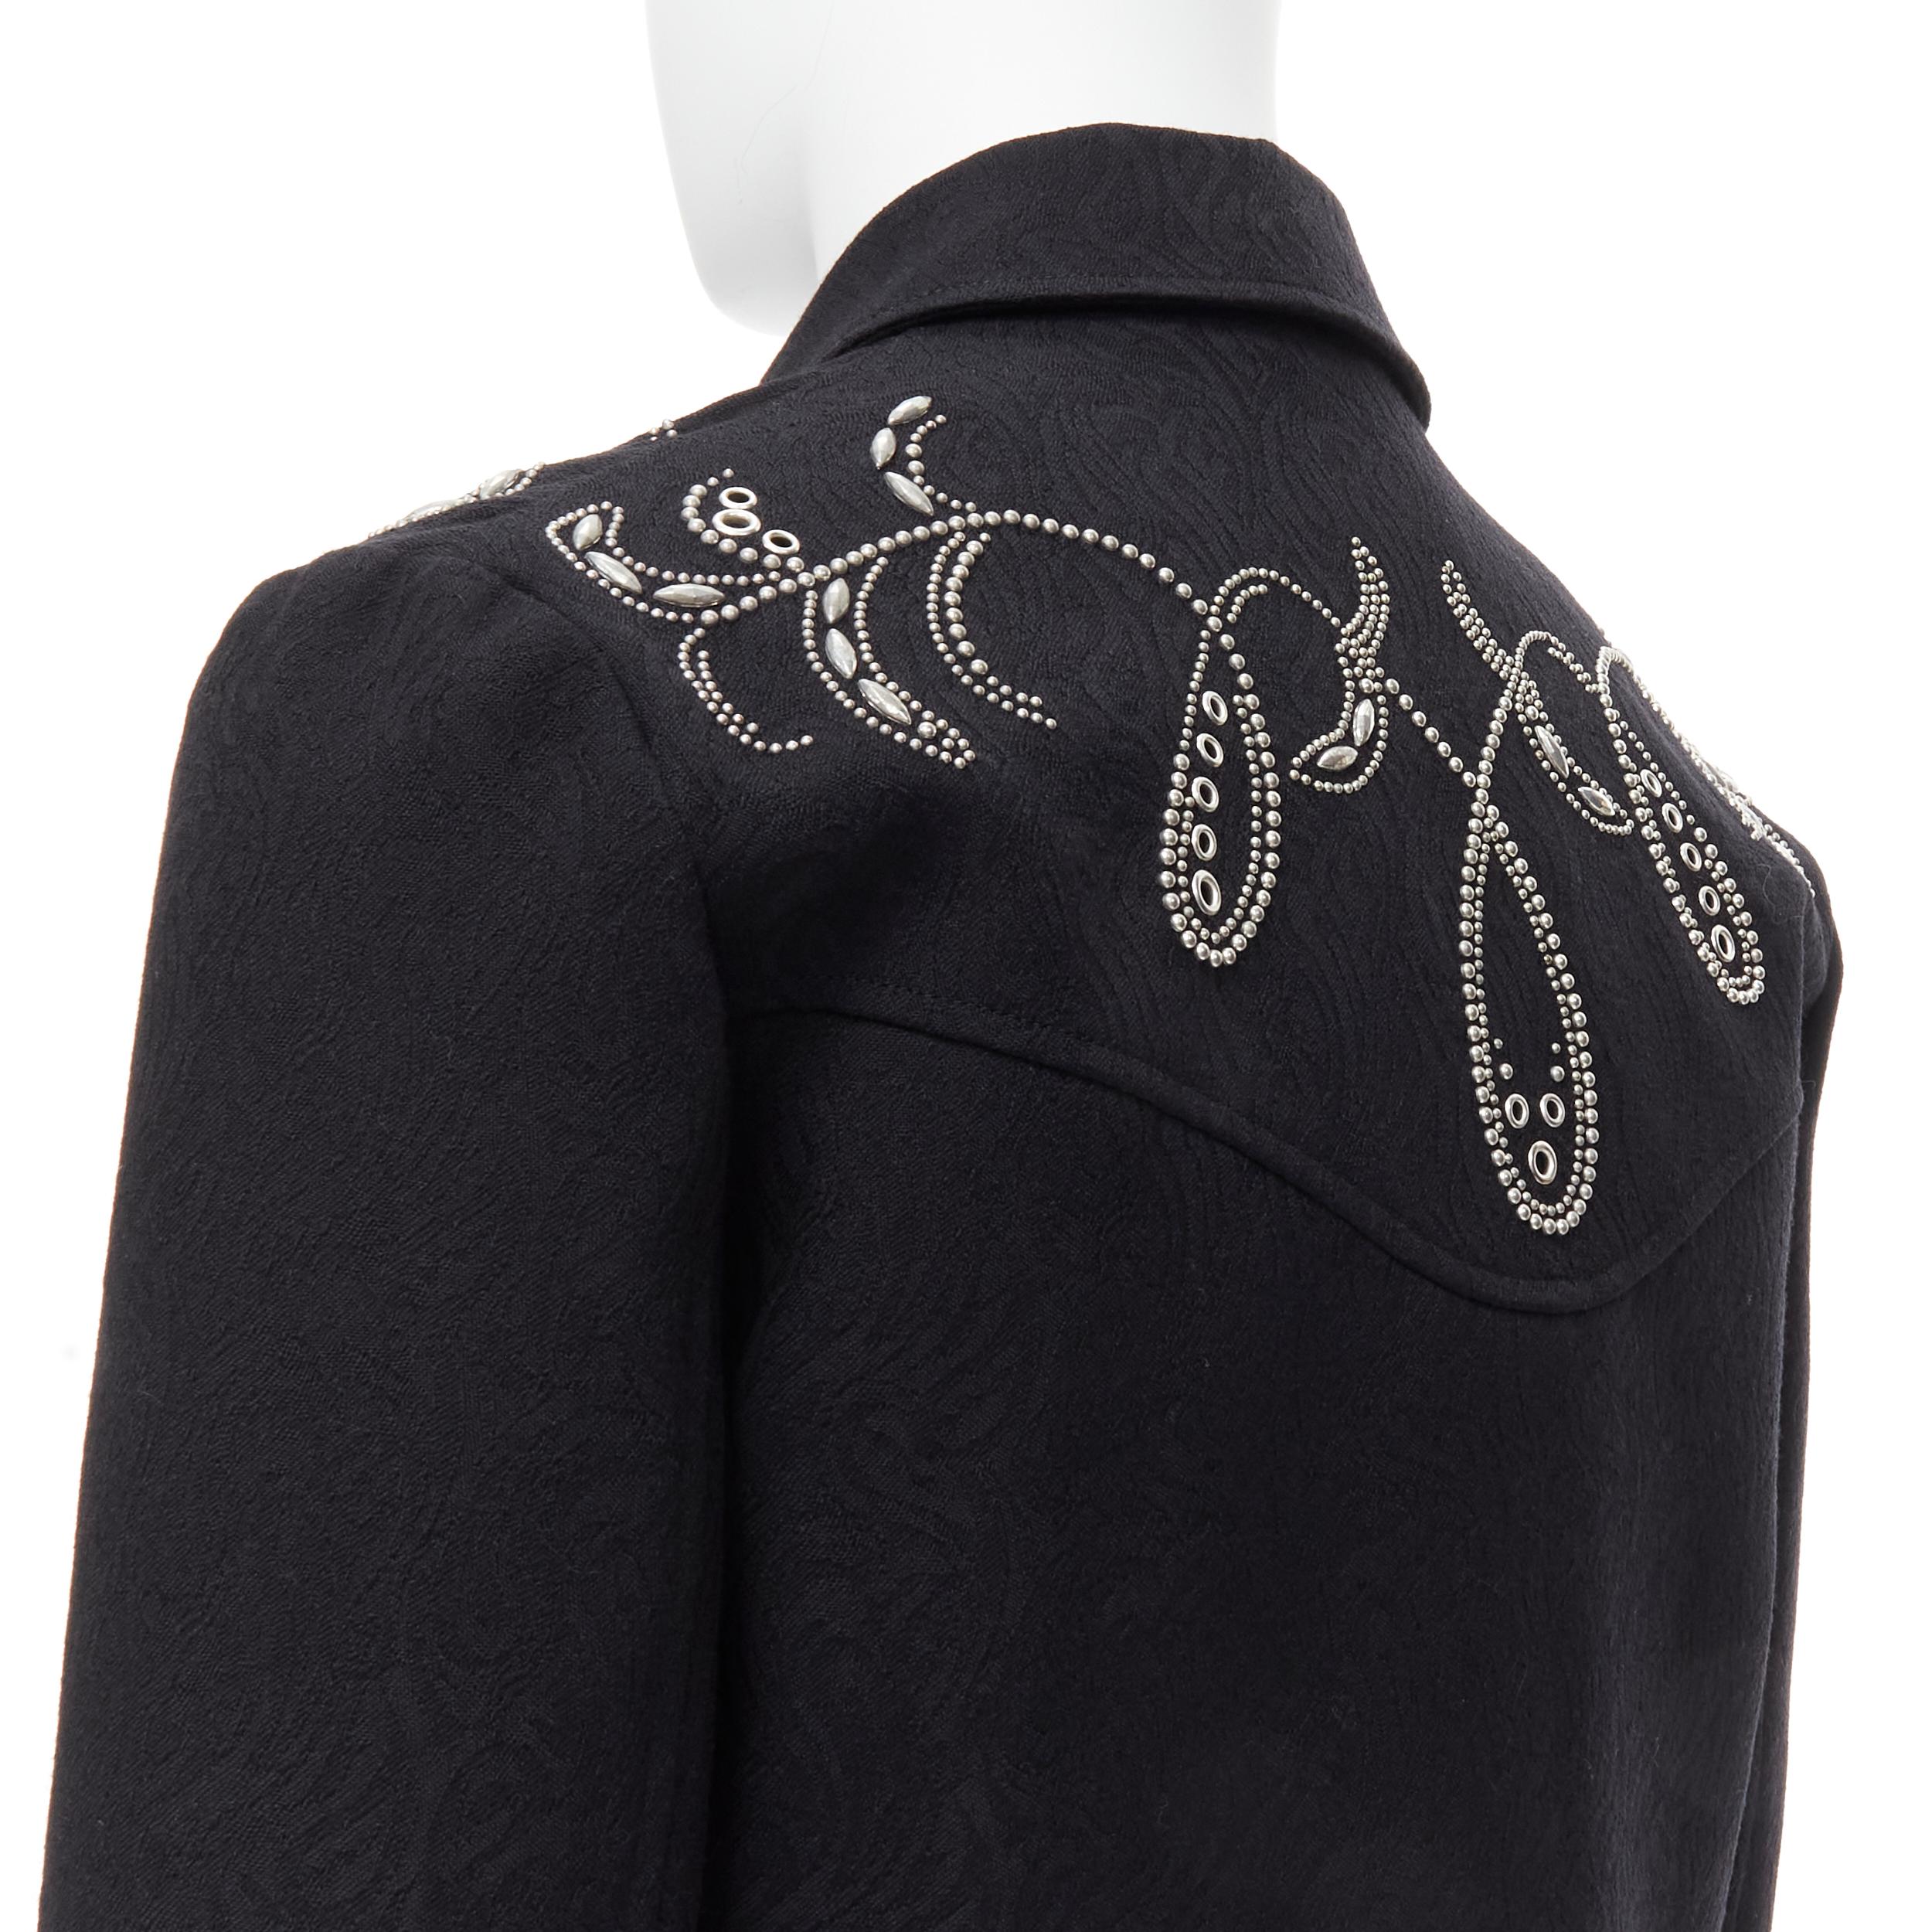 new SAINT LAURENT 2018 Teddy black damask silver western studded jacket EU46 S 2